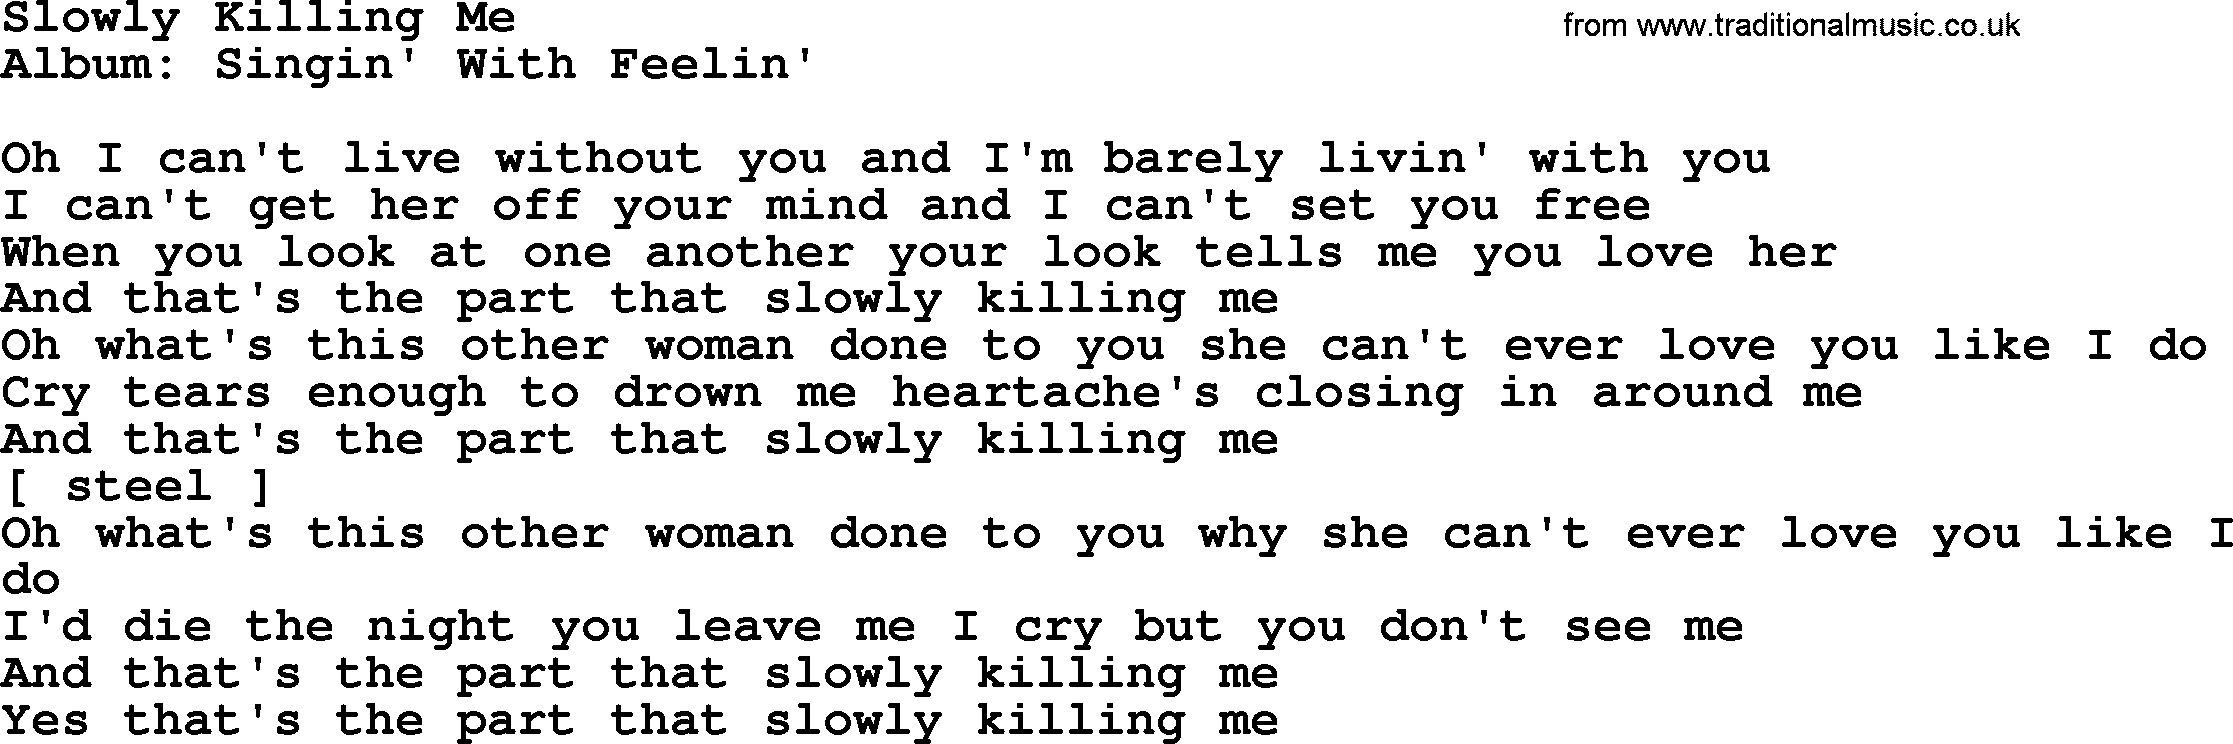 Loretta Lynn song: Slowly Killing Me lyrics